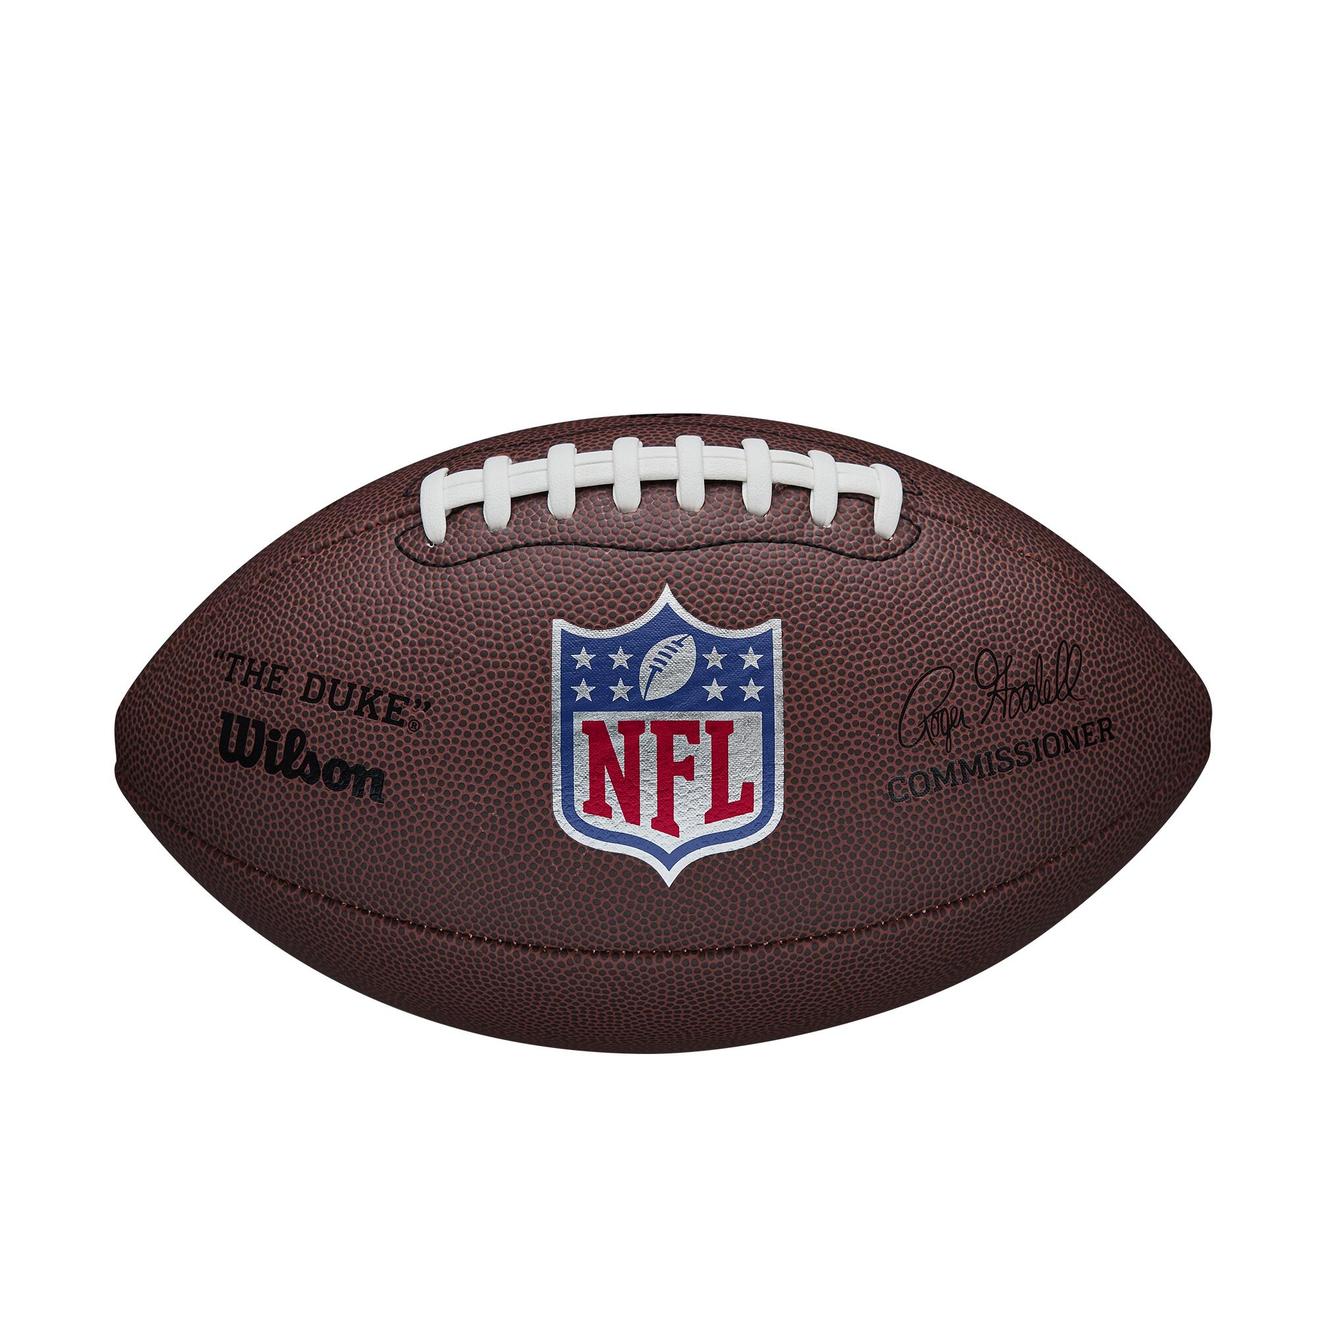 American Football Ball NFL - Duke Replica Offiziell braun für 39,99€ in Decathlon